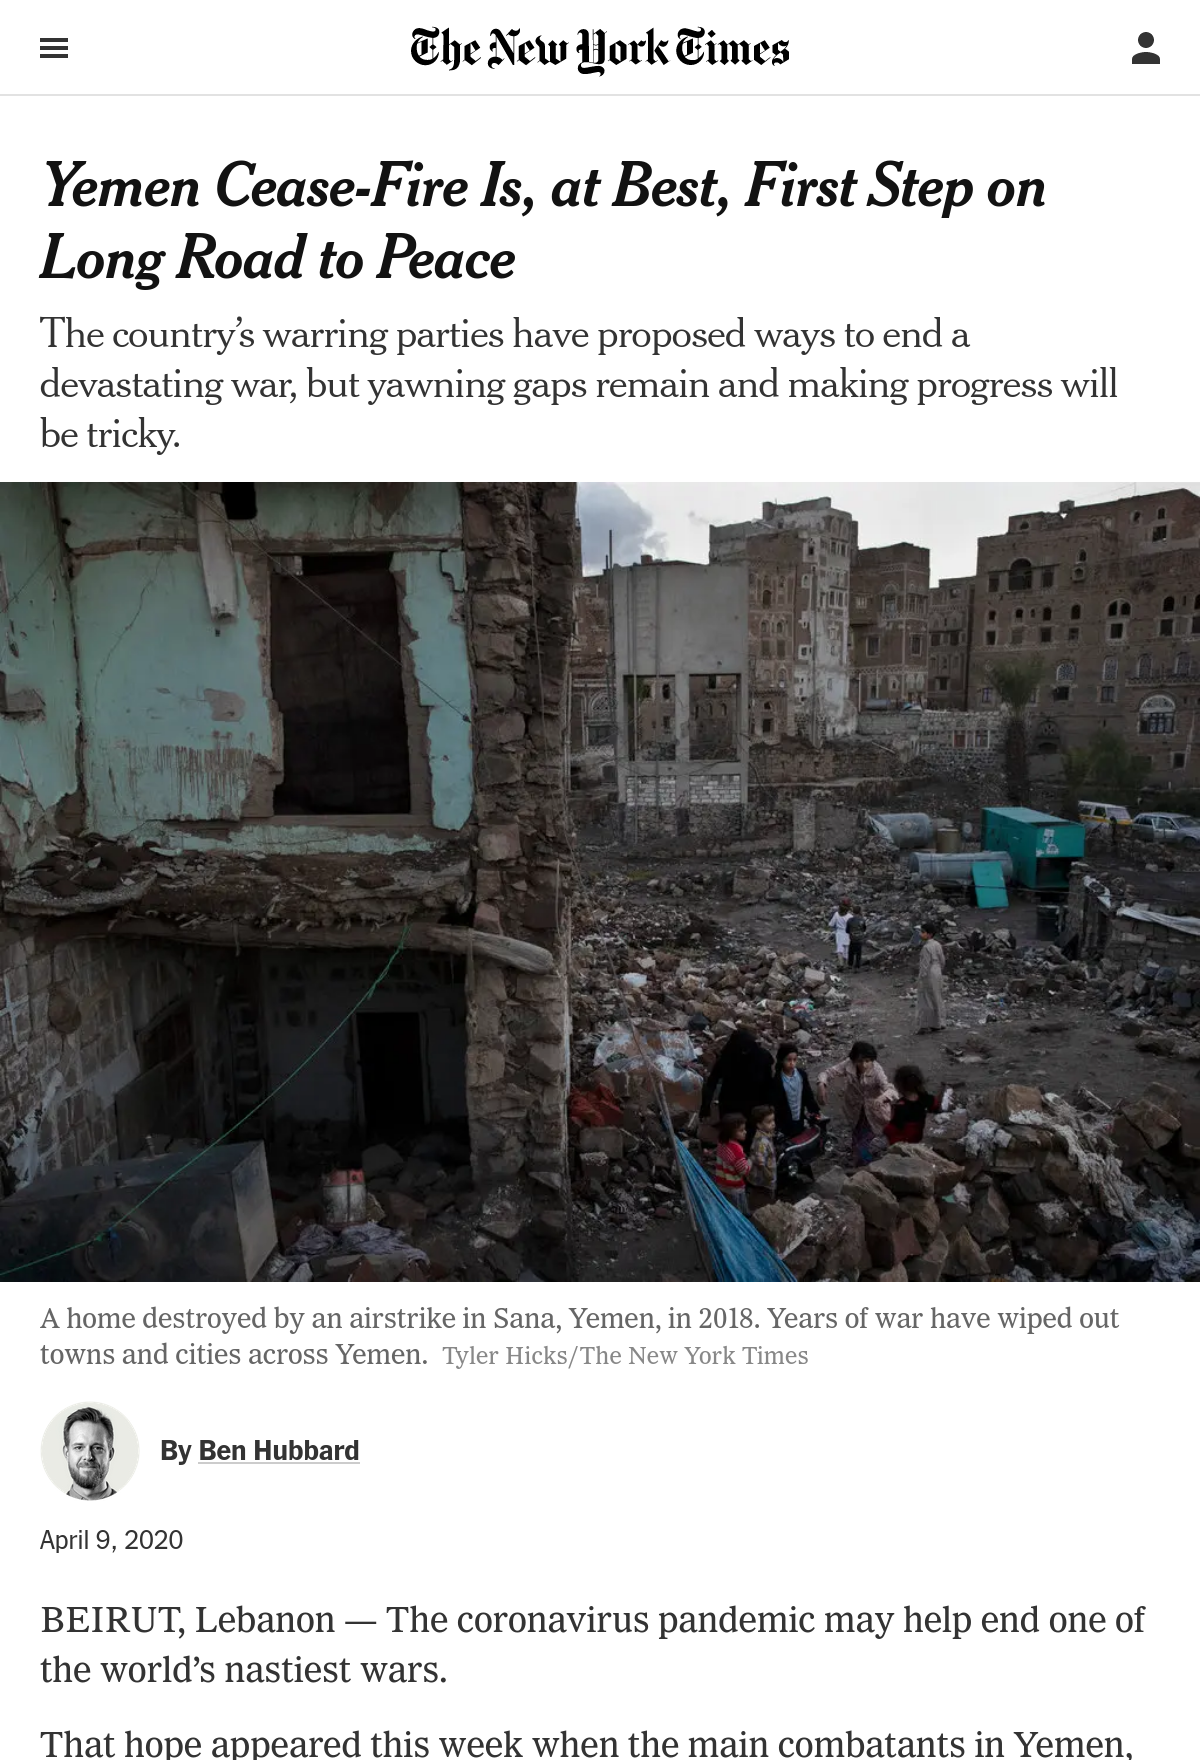 New York Times - Yemen Cease-fire